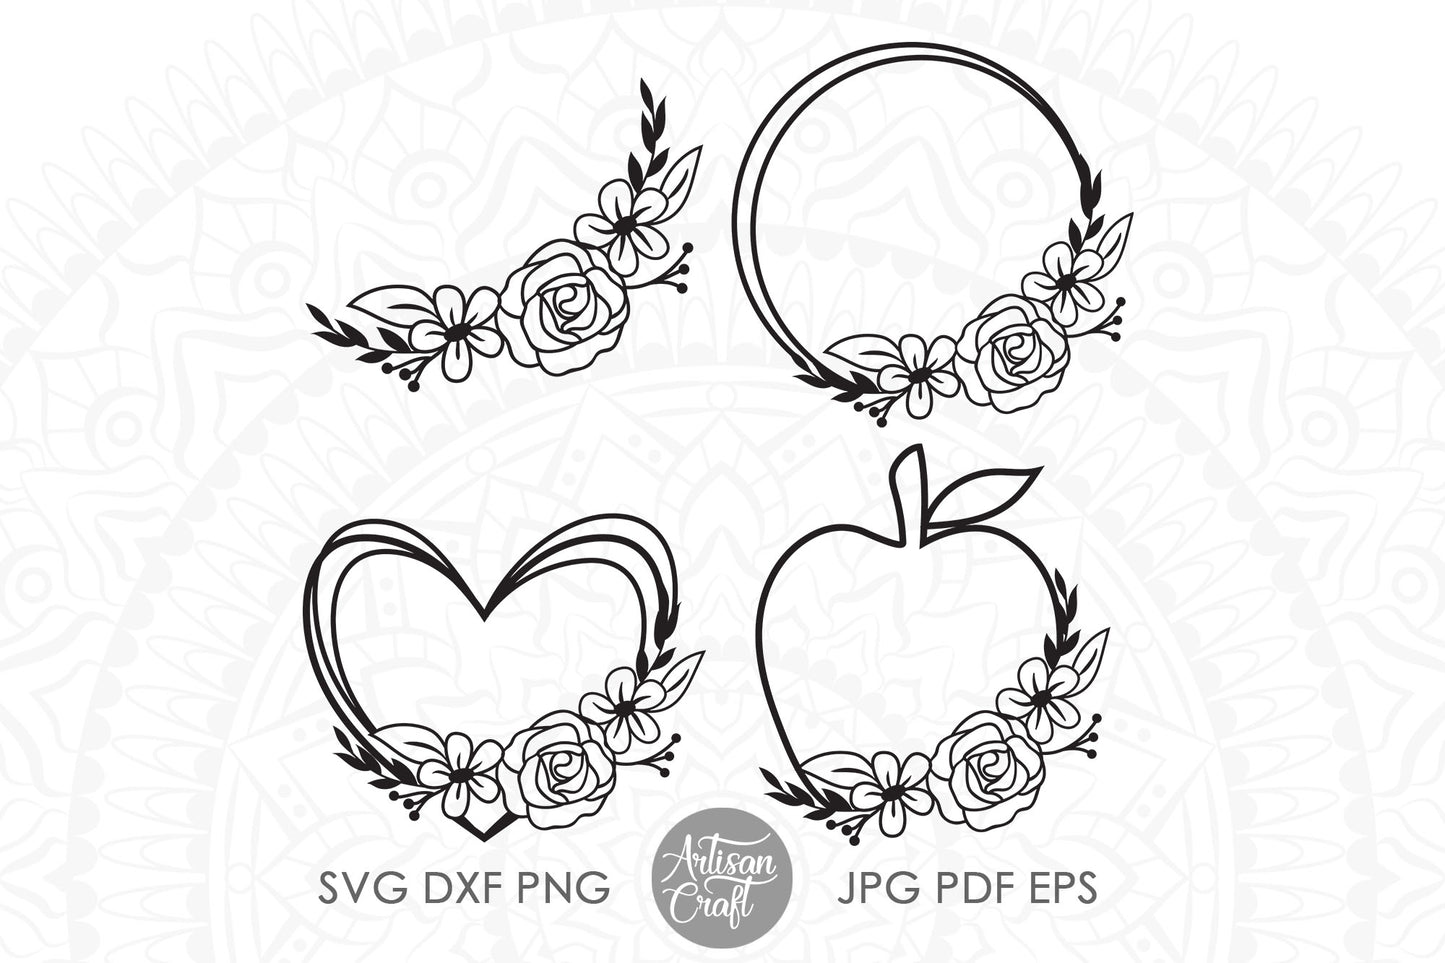 Flower Wreath SVG cut file